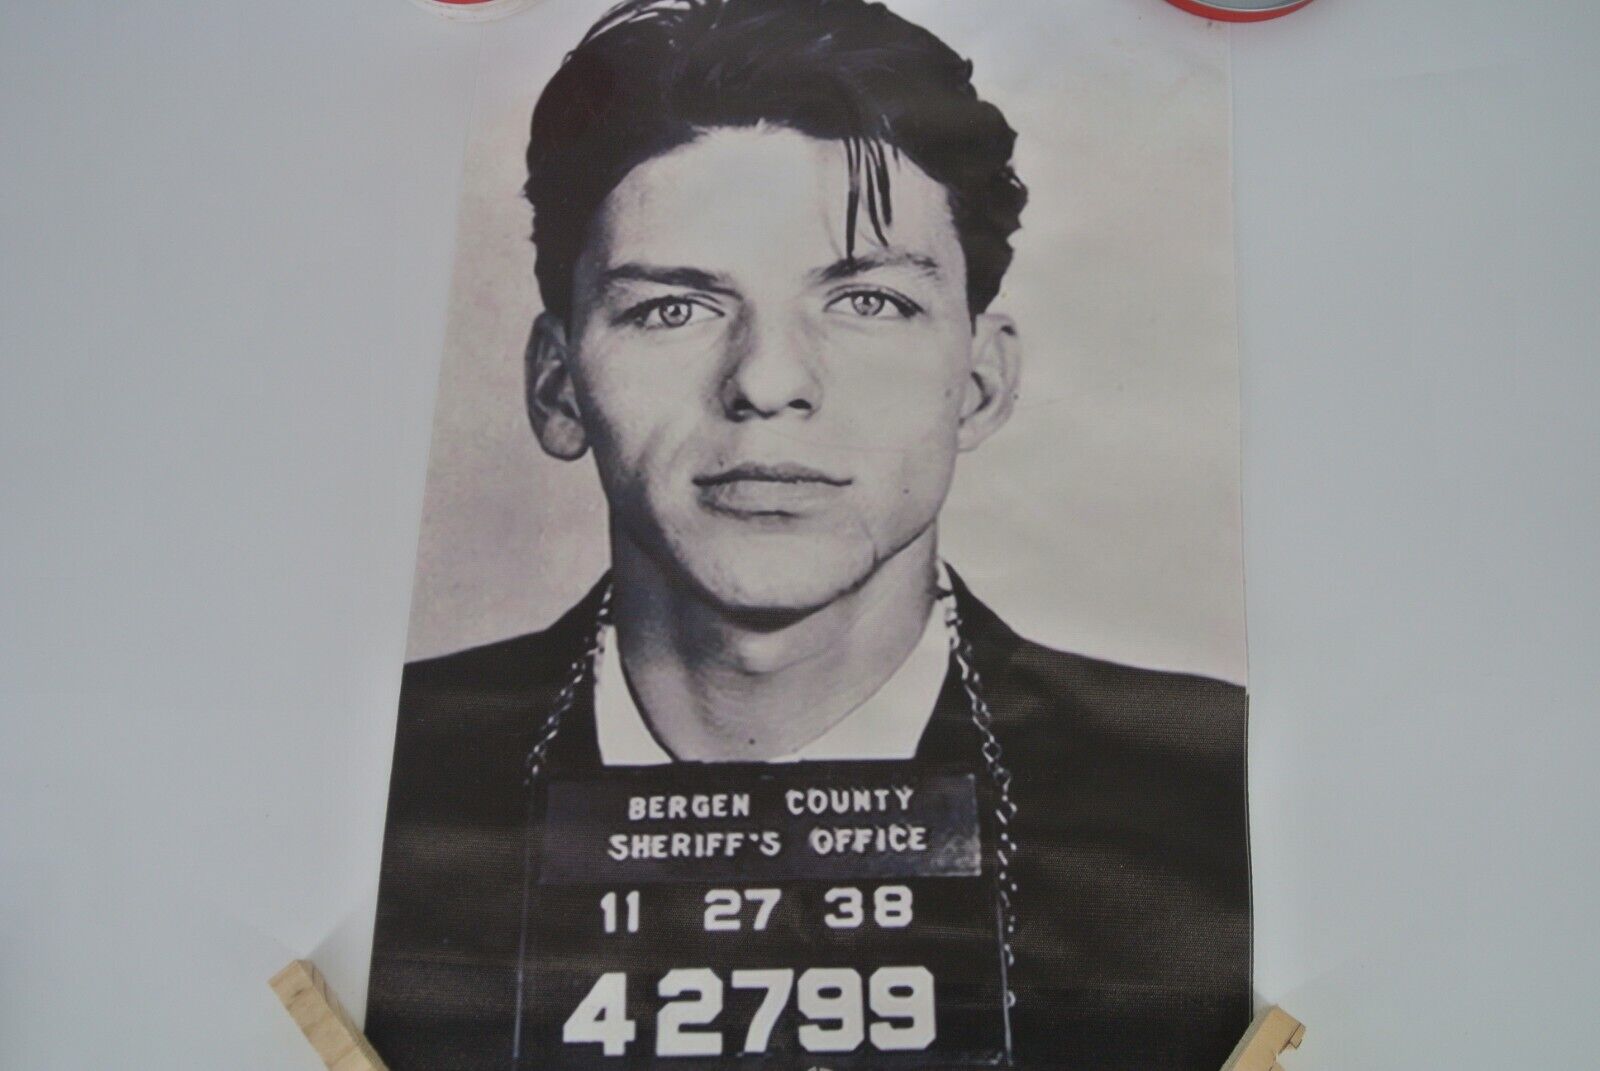 Frank Sinatra Poster 11X17 Mug Shot Arrested For Seduction 1938 New Jersey